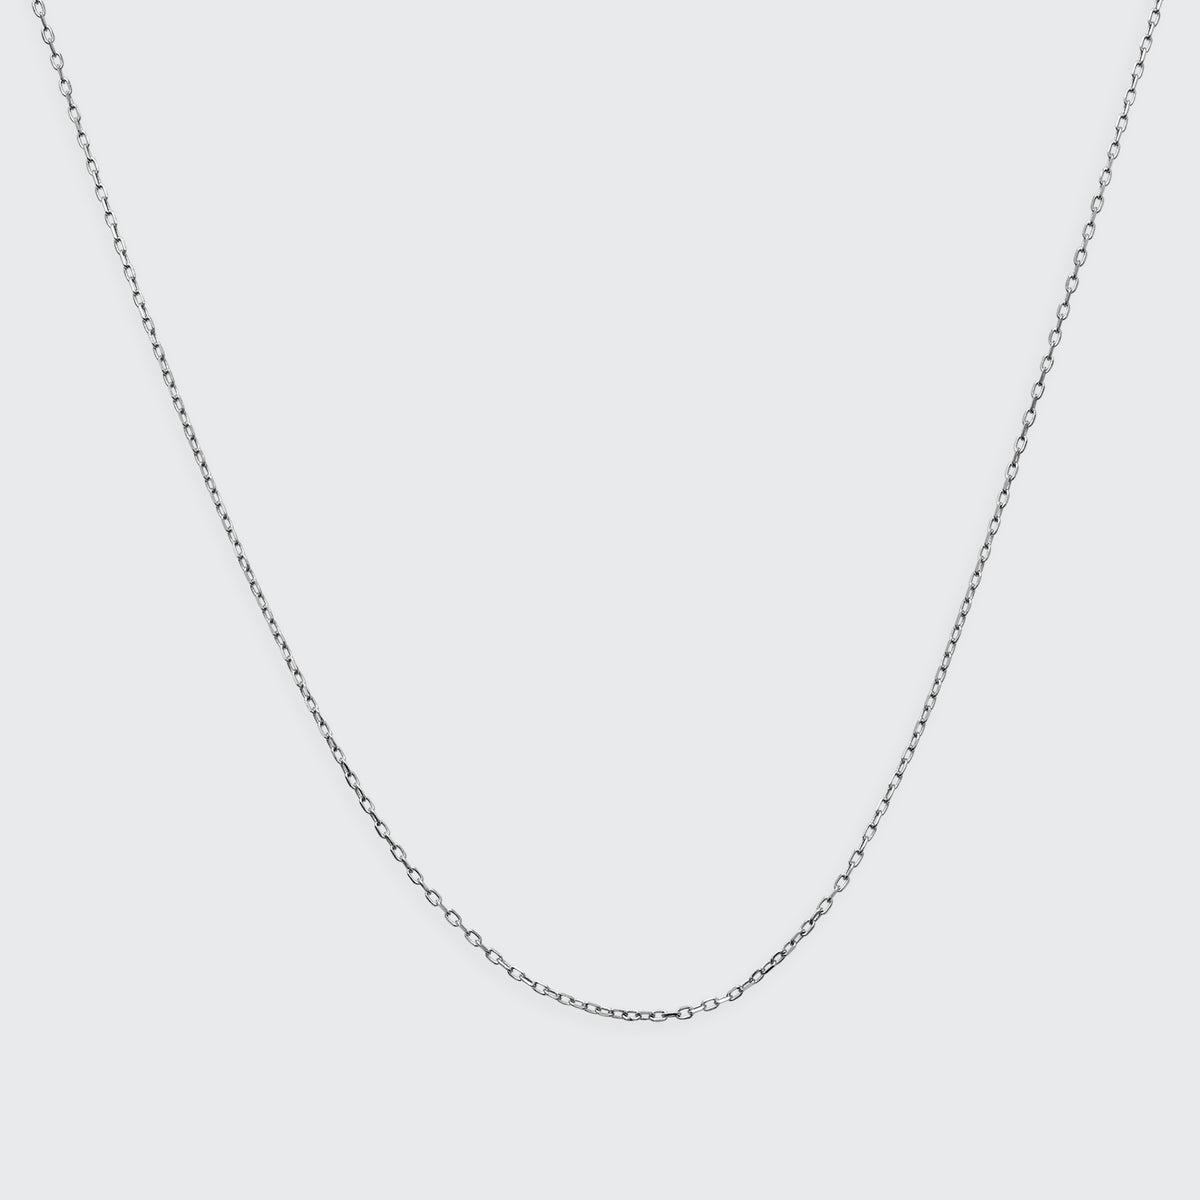 Silberkette 40-45cm - f102171bbf1602b09e7afe9fd182cd10